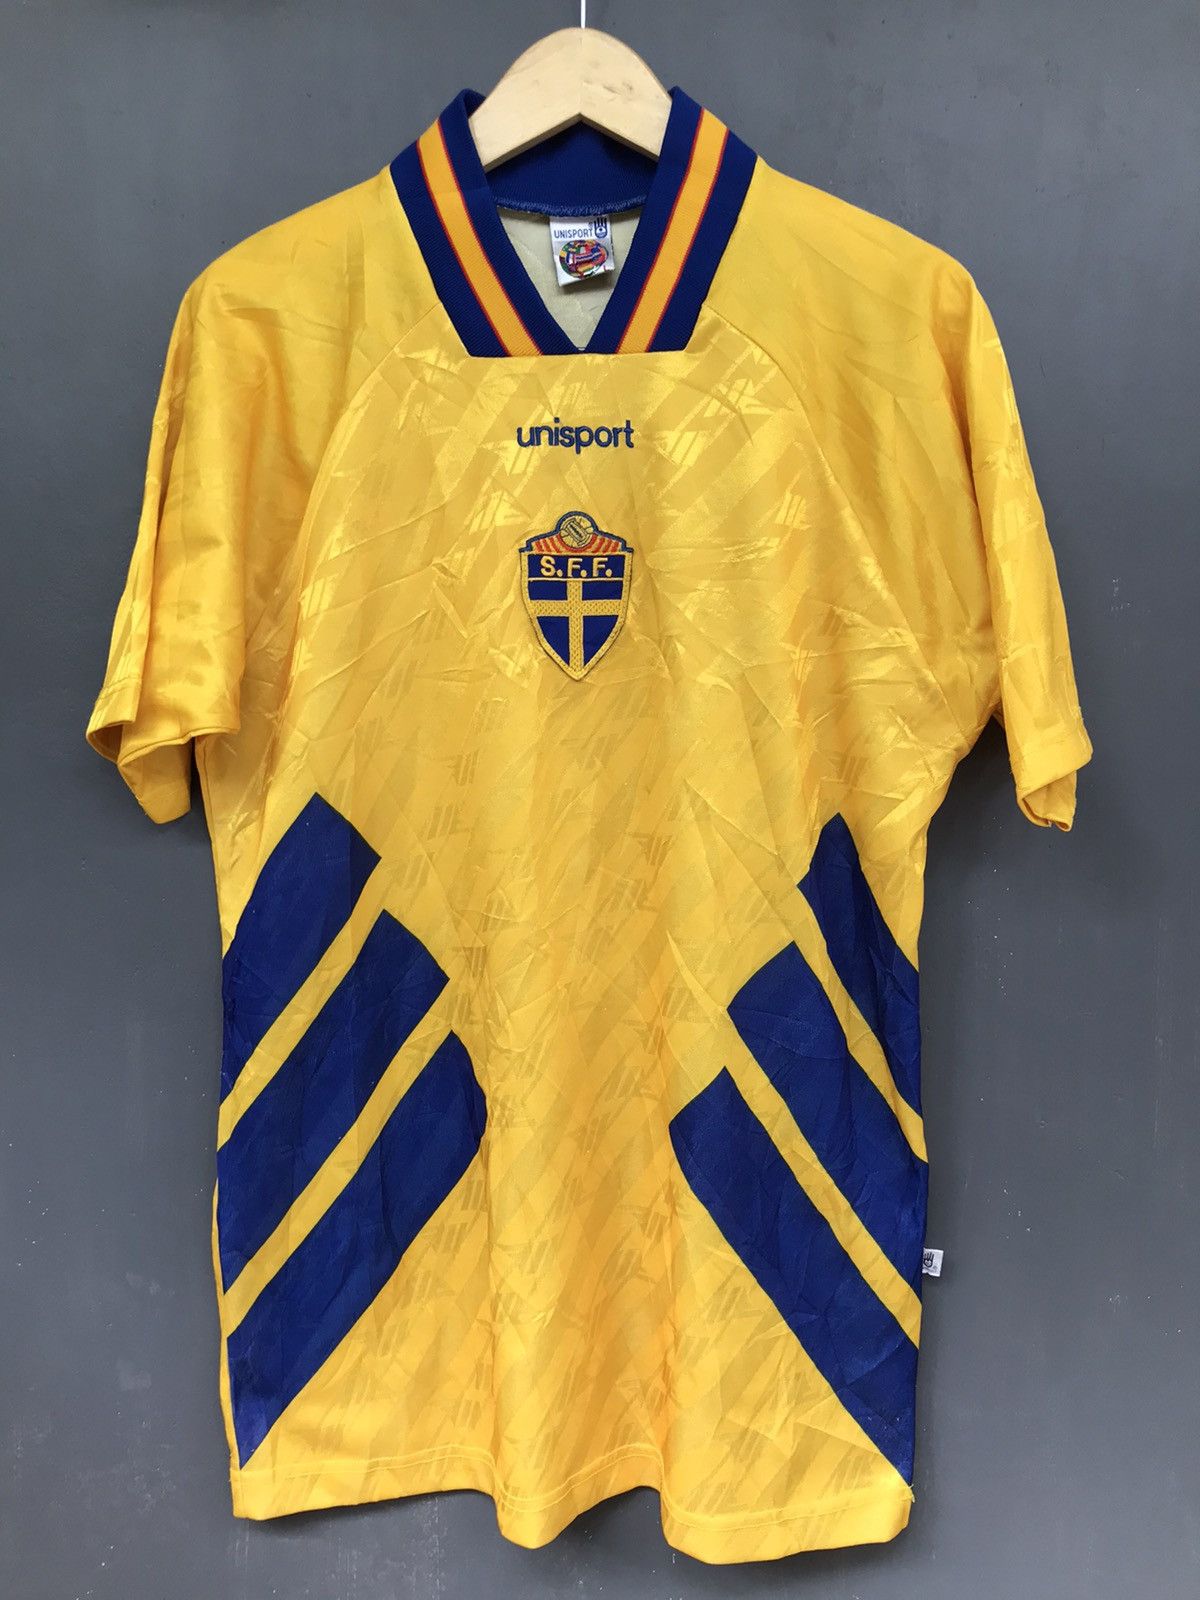 Do custom jersey vintage design for soccer, bloke core and brand by  Sixsoneninesss